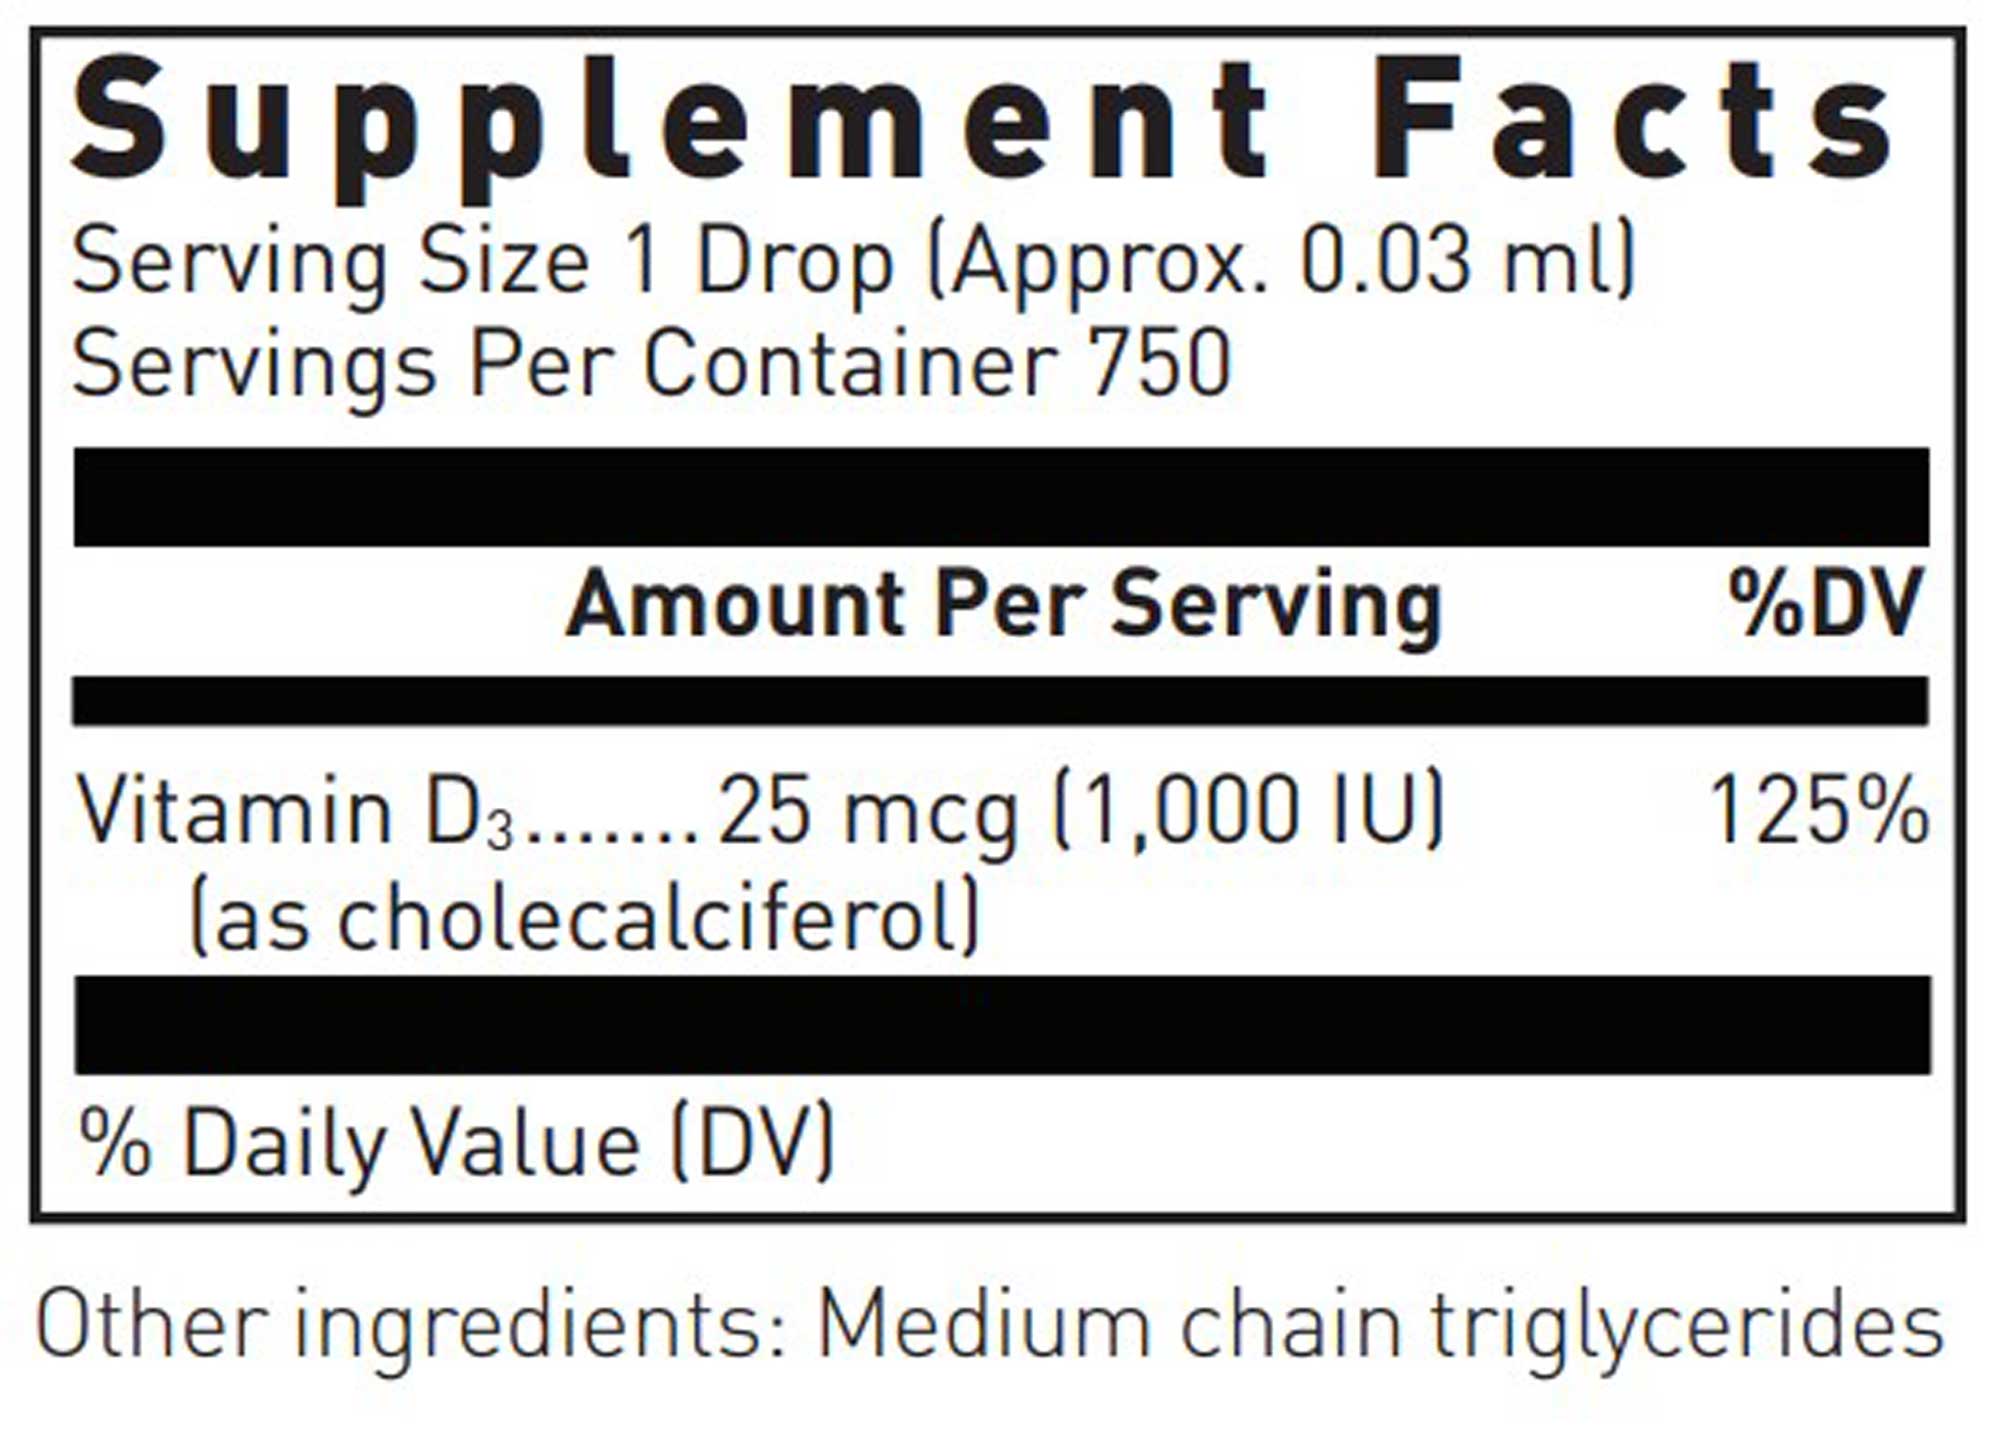 Douglas Laboratories Liquid Vitamin D-3